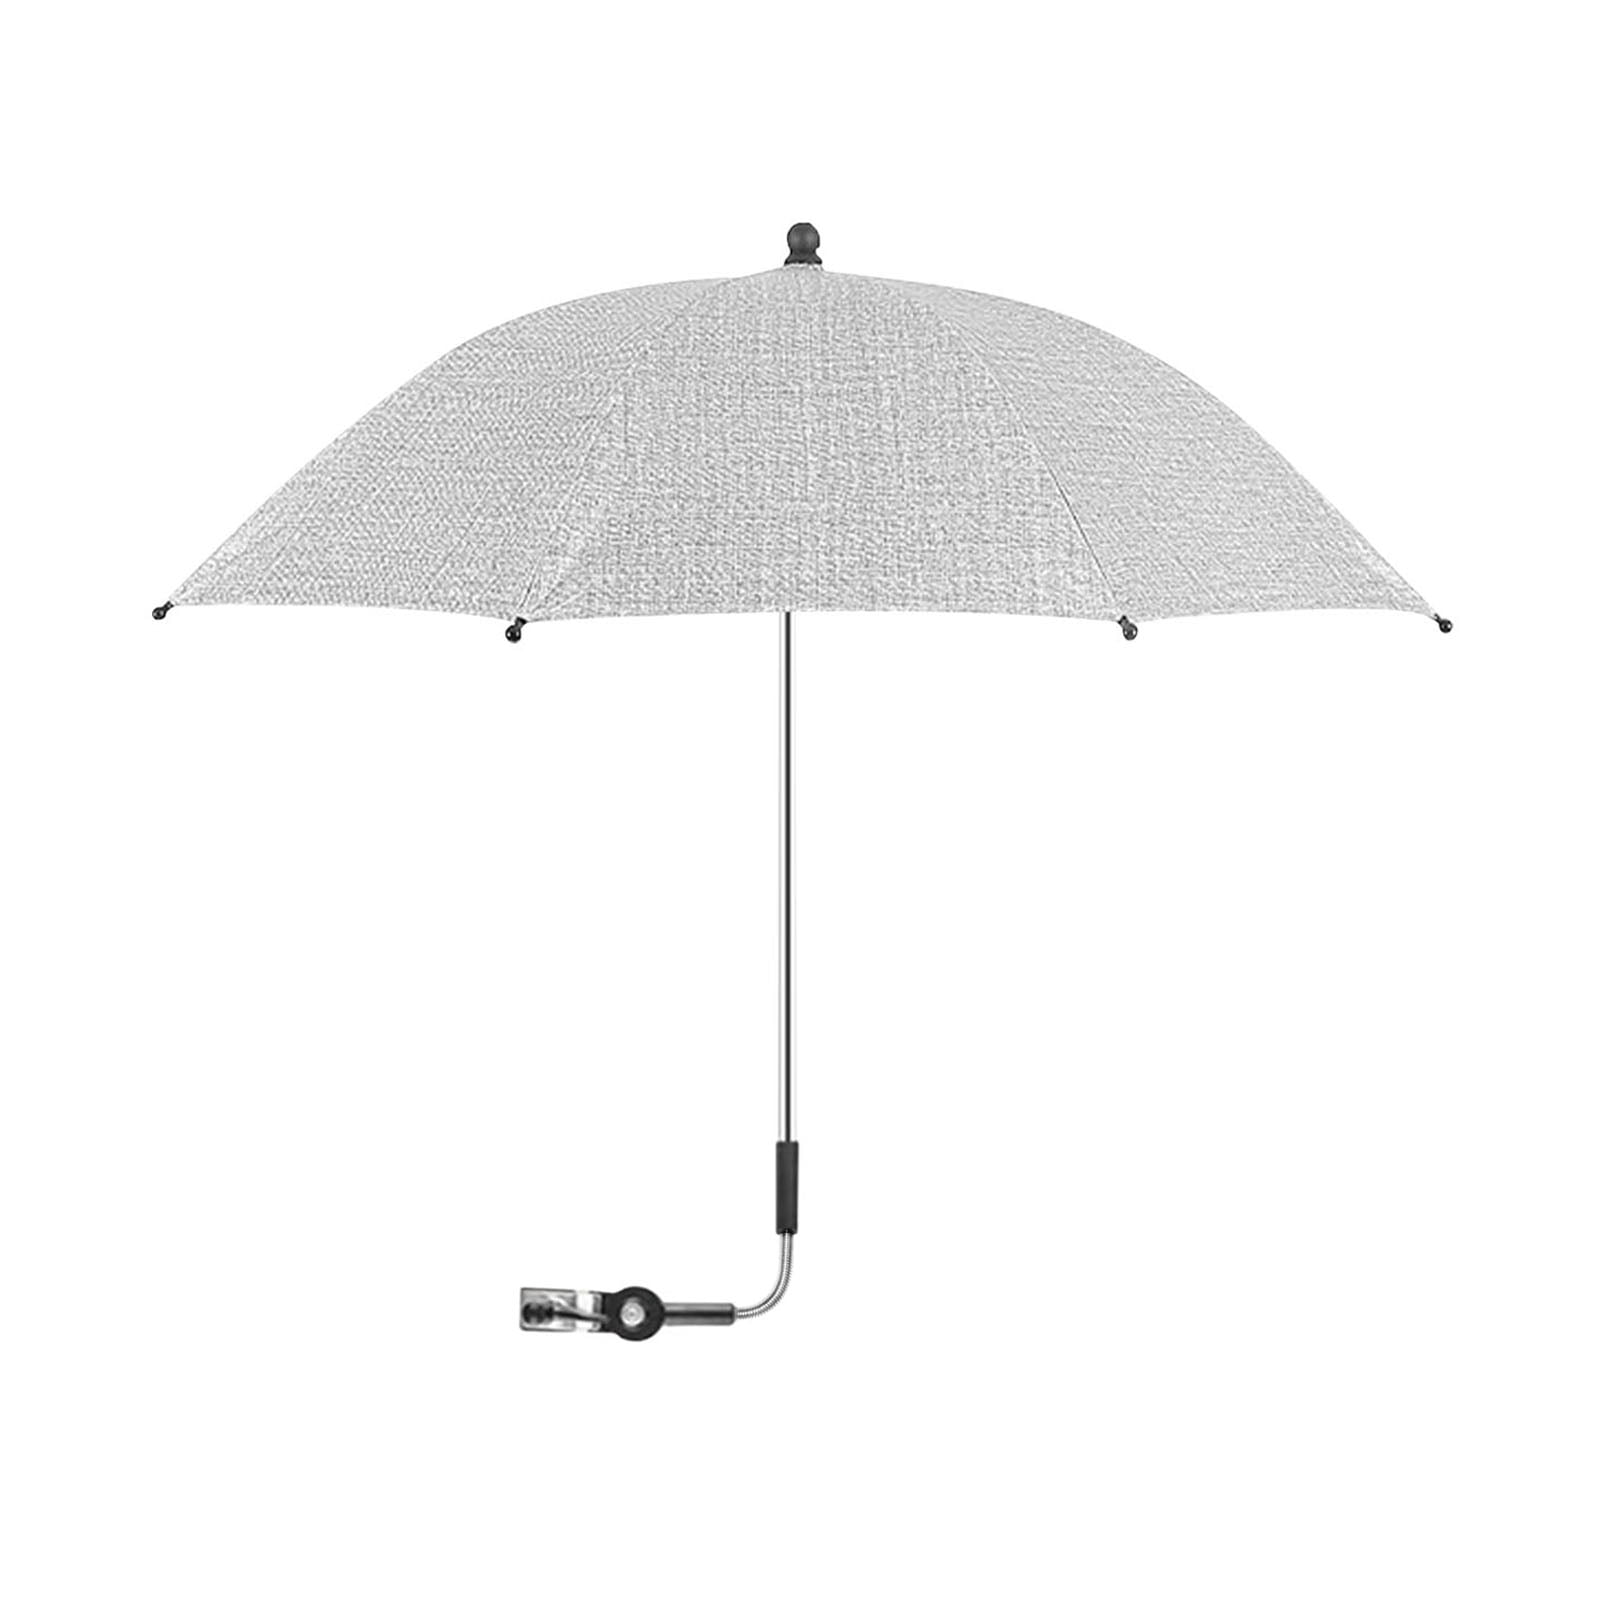 Portable Baby Pram Umbrella Durable Parasol Umbrella for Pram | Baby and Sun Protection Umbrella for Stroller, Pushchair - Walmart.com